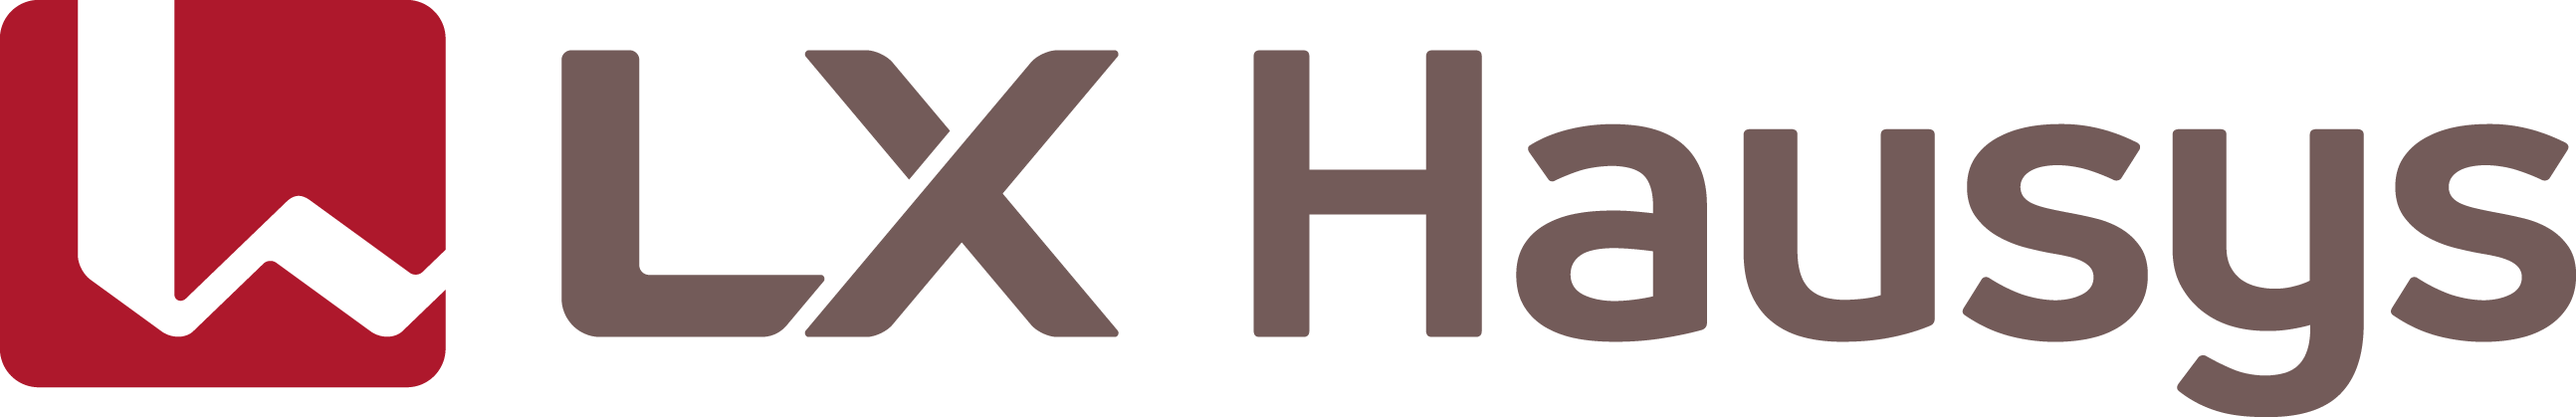 LX Hausys Logo